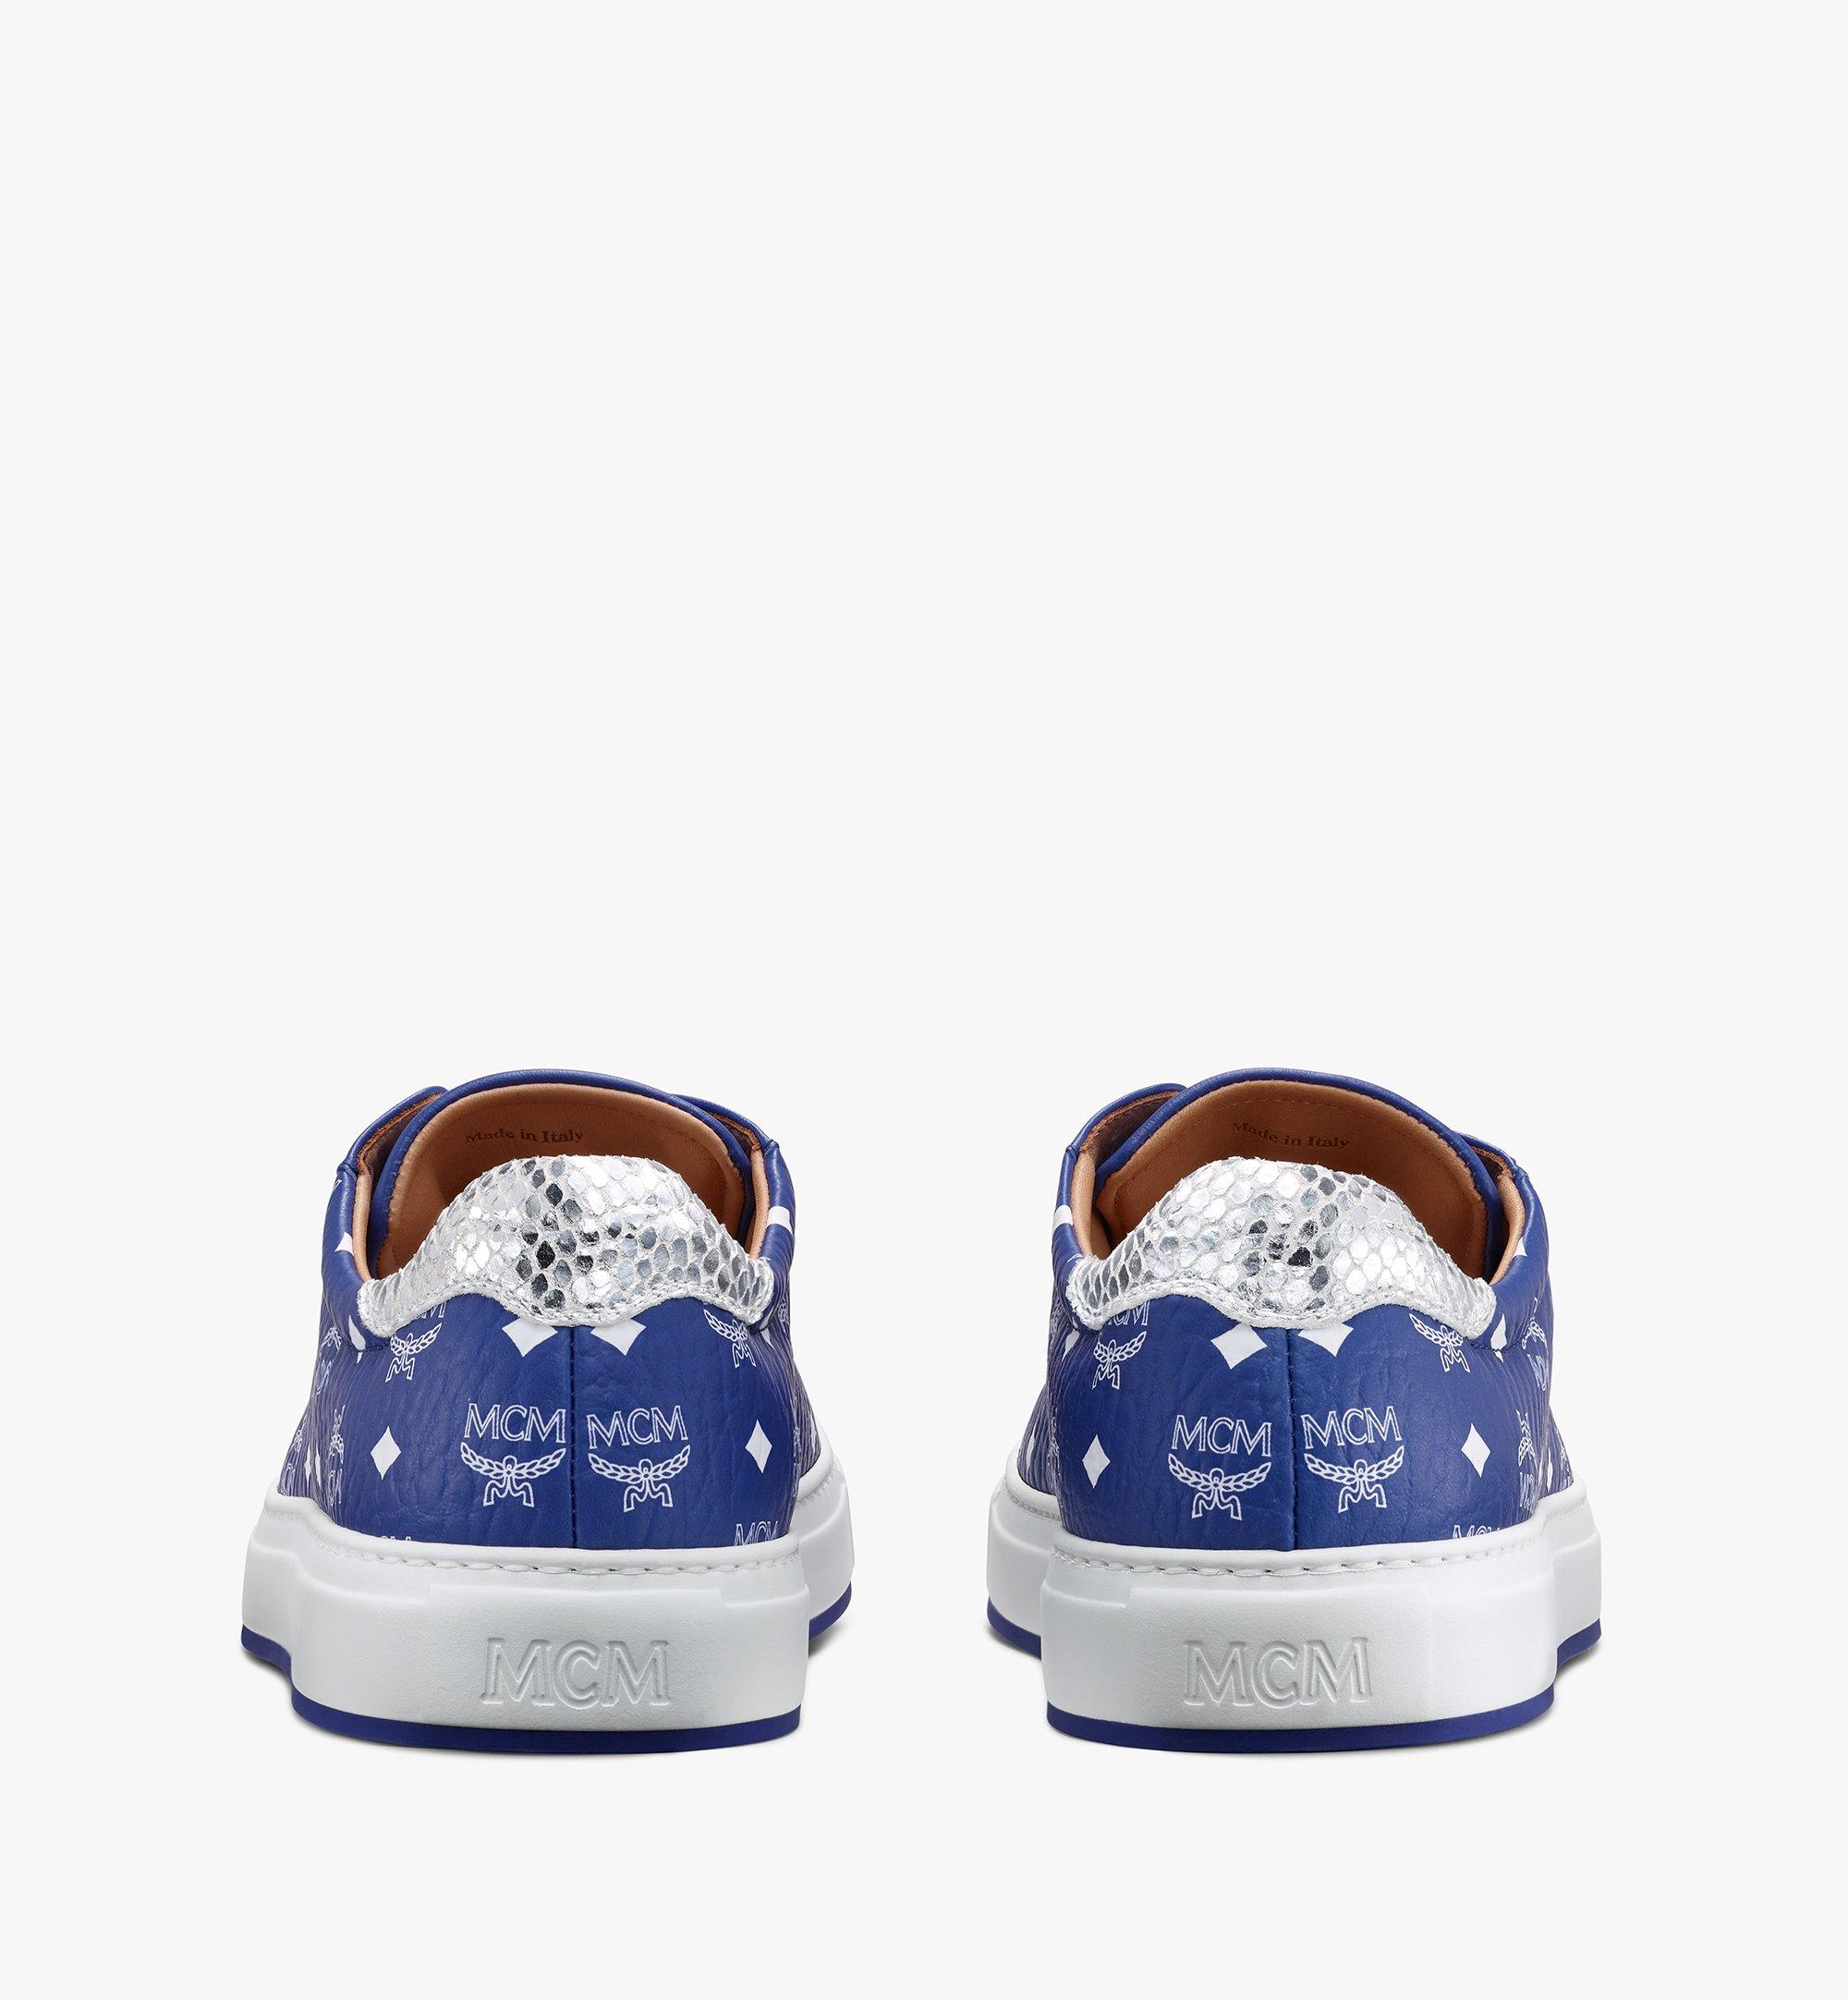 Mcm Women's Monogram Low Top Sneakers - Blue - Size 37